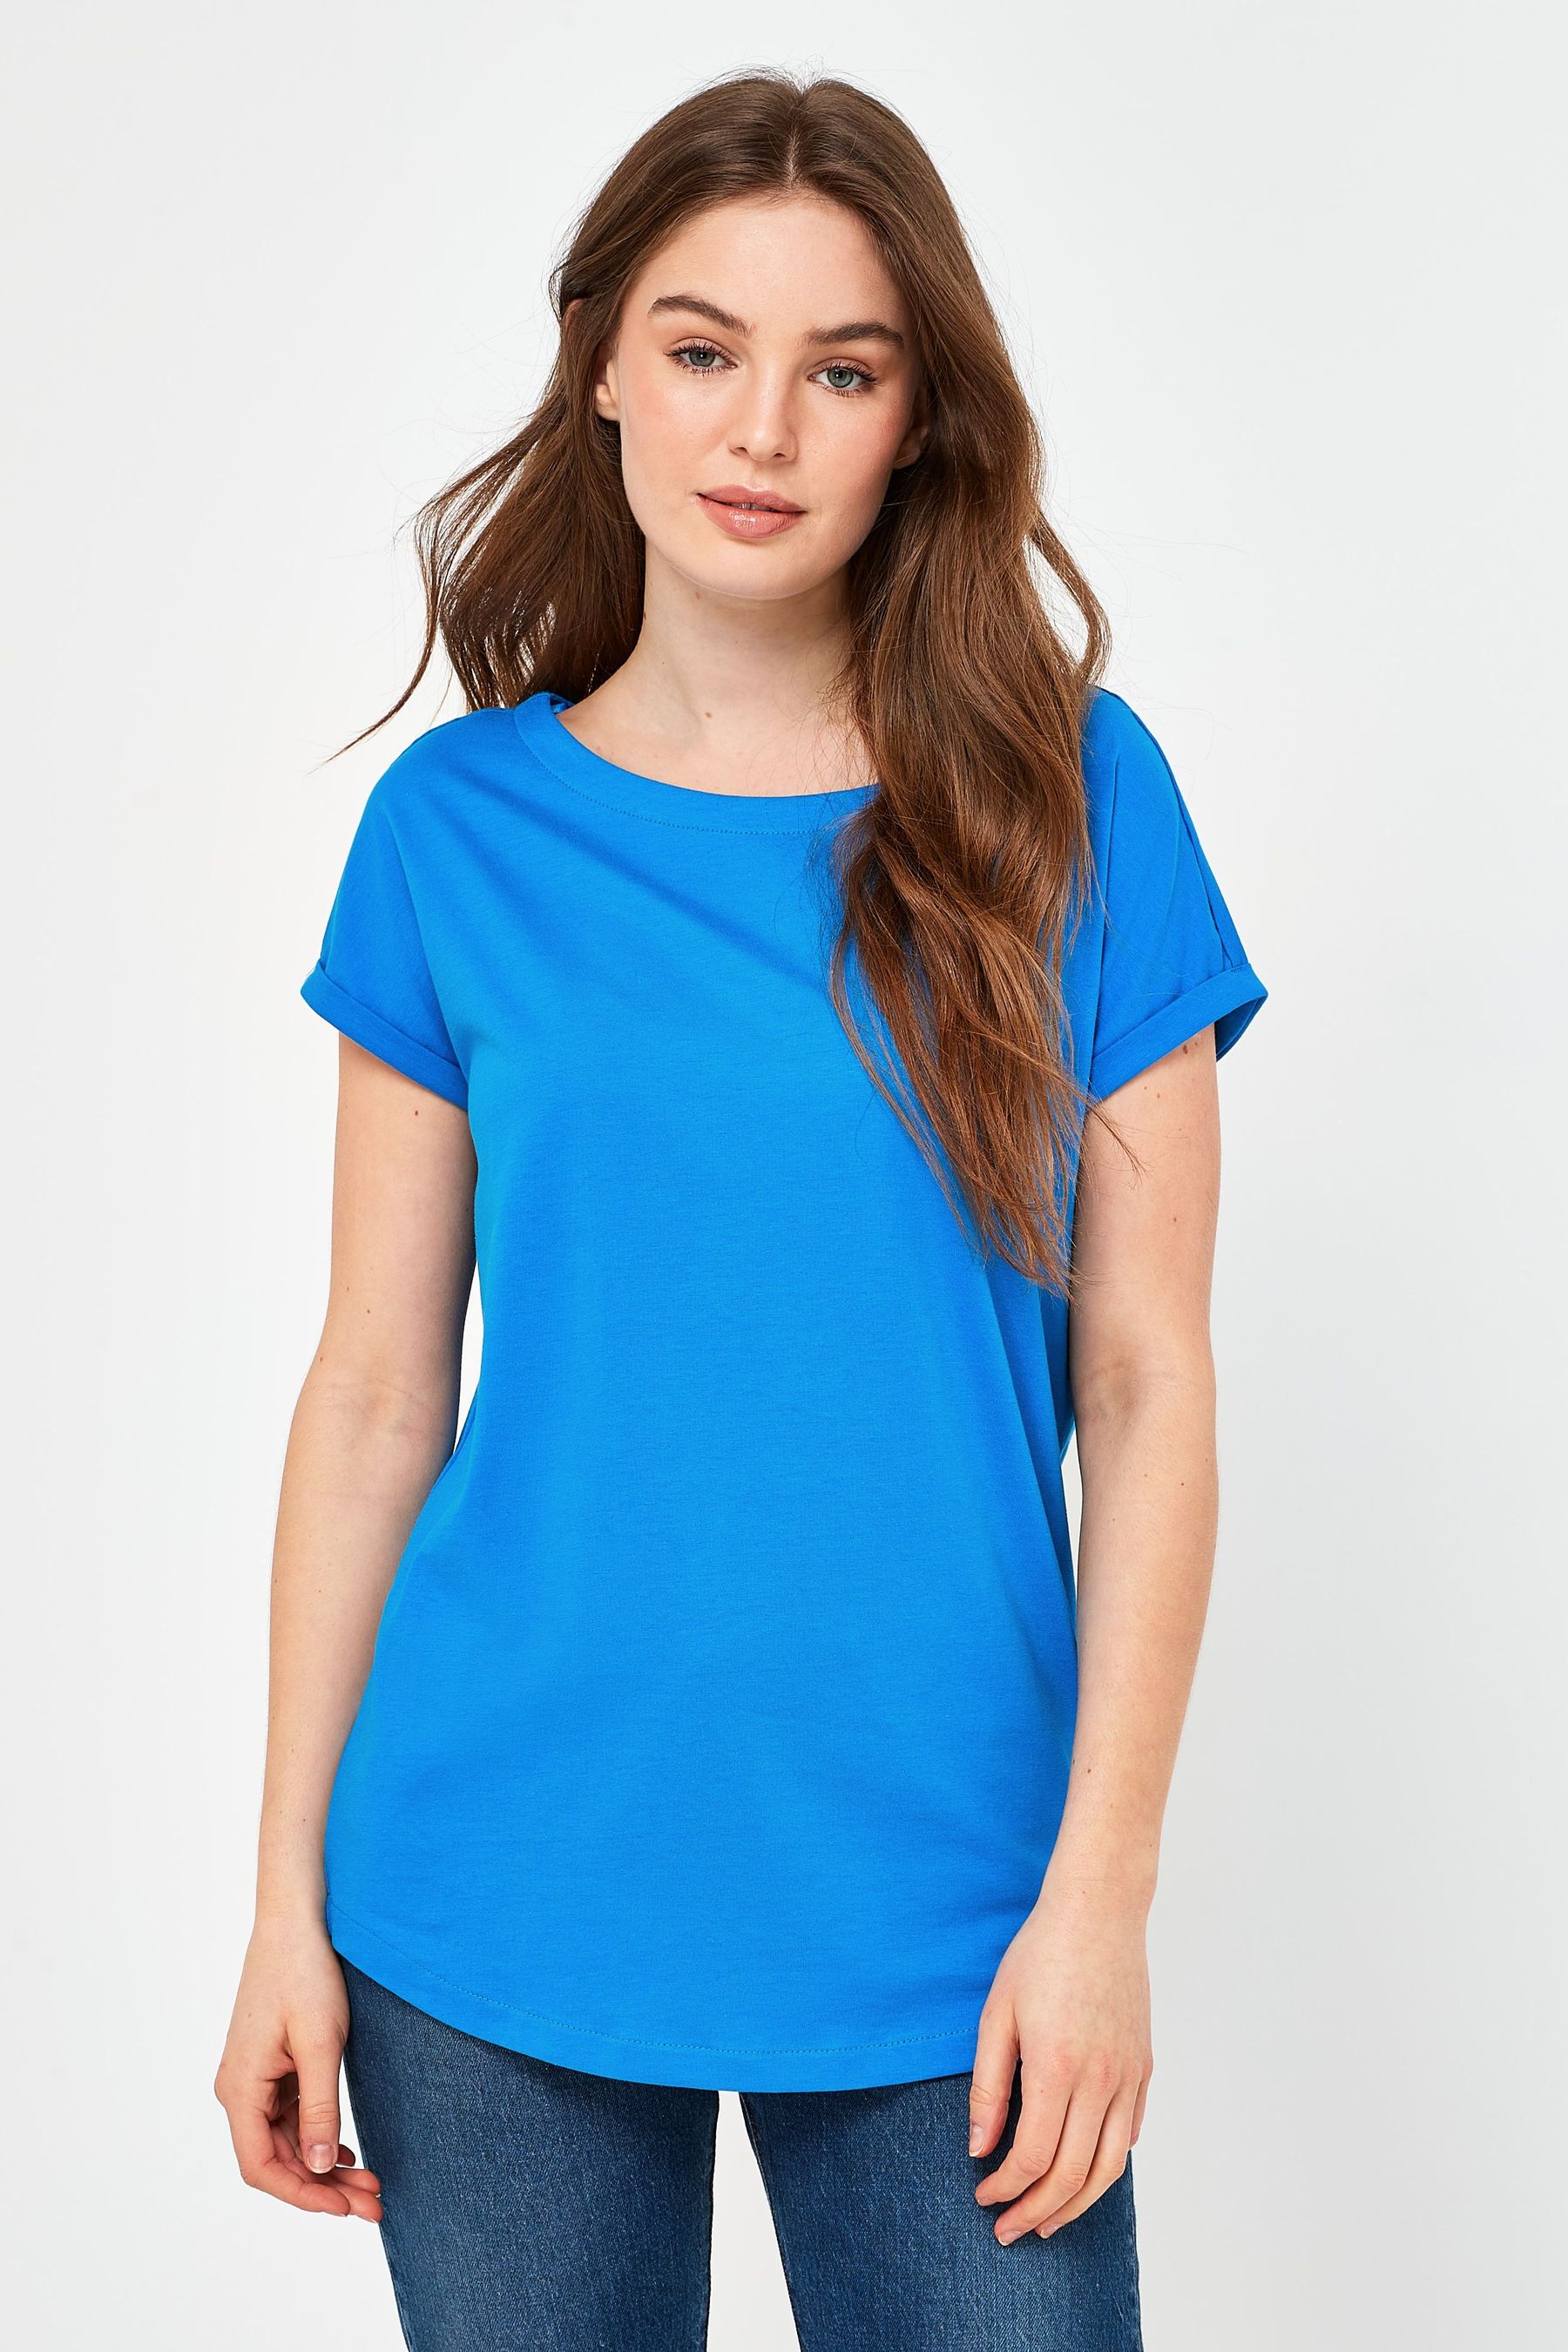 Buy Blue Cobalt Round Neck Cap Sleeve T-Shirt from the Next UK online shop